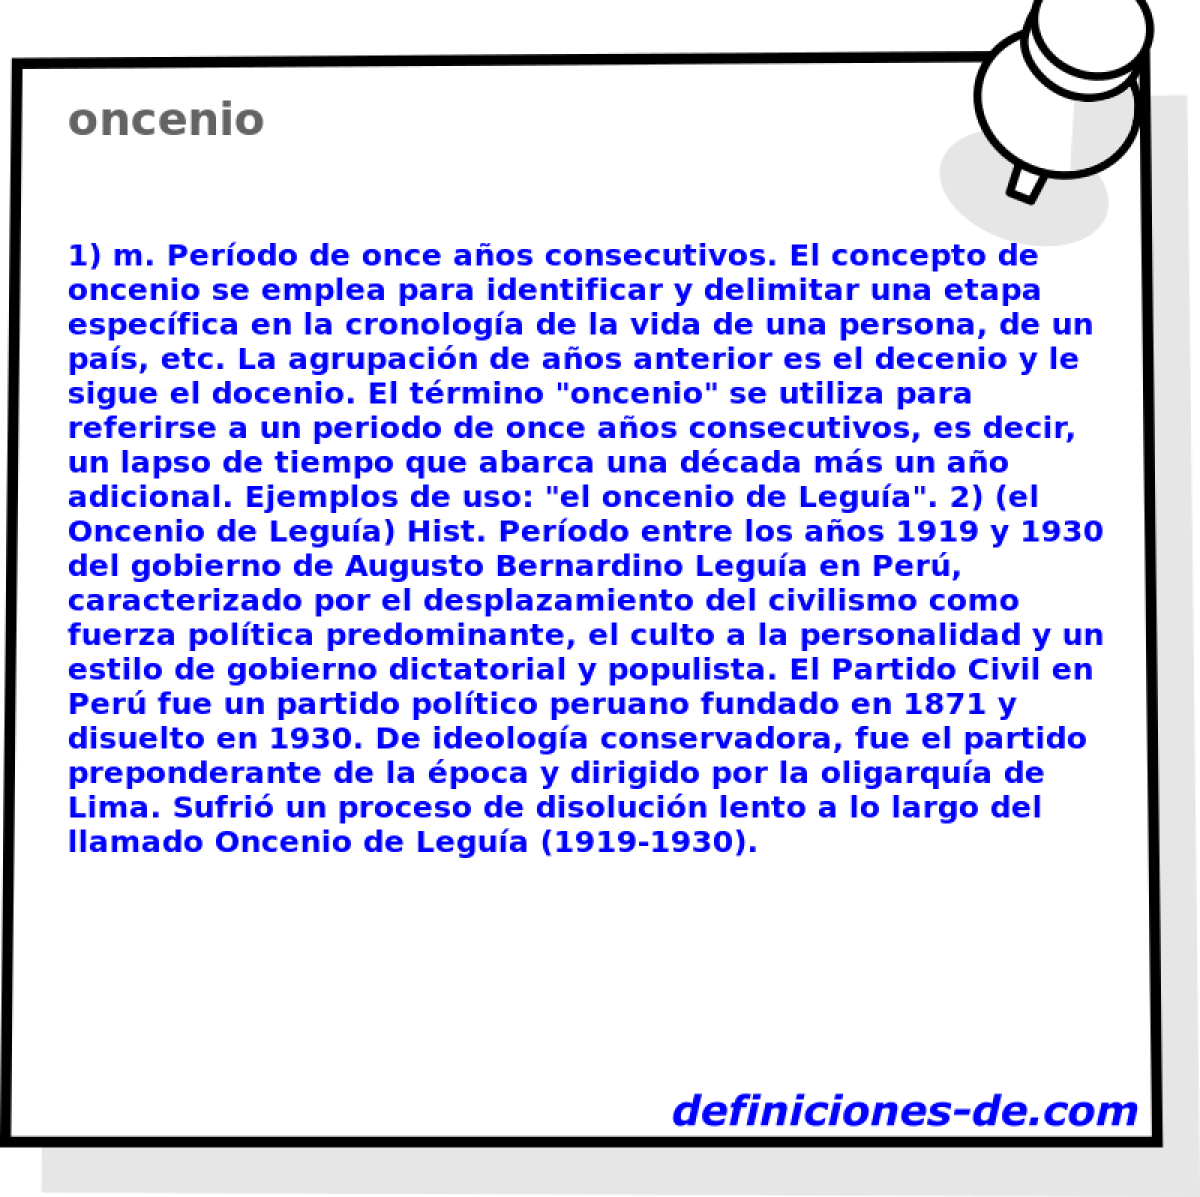 oncenio 